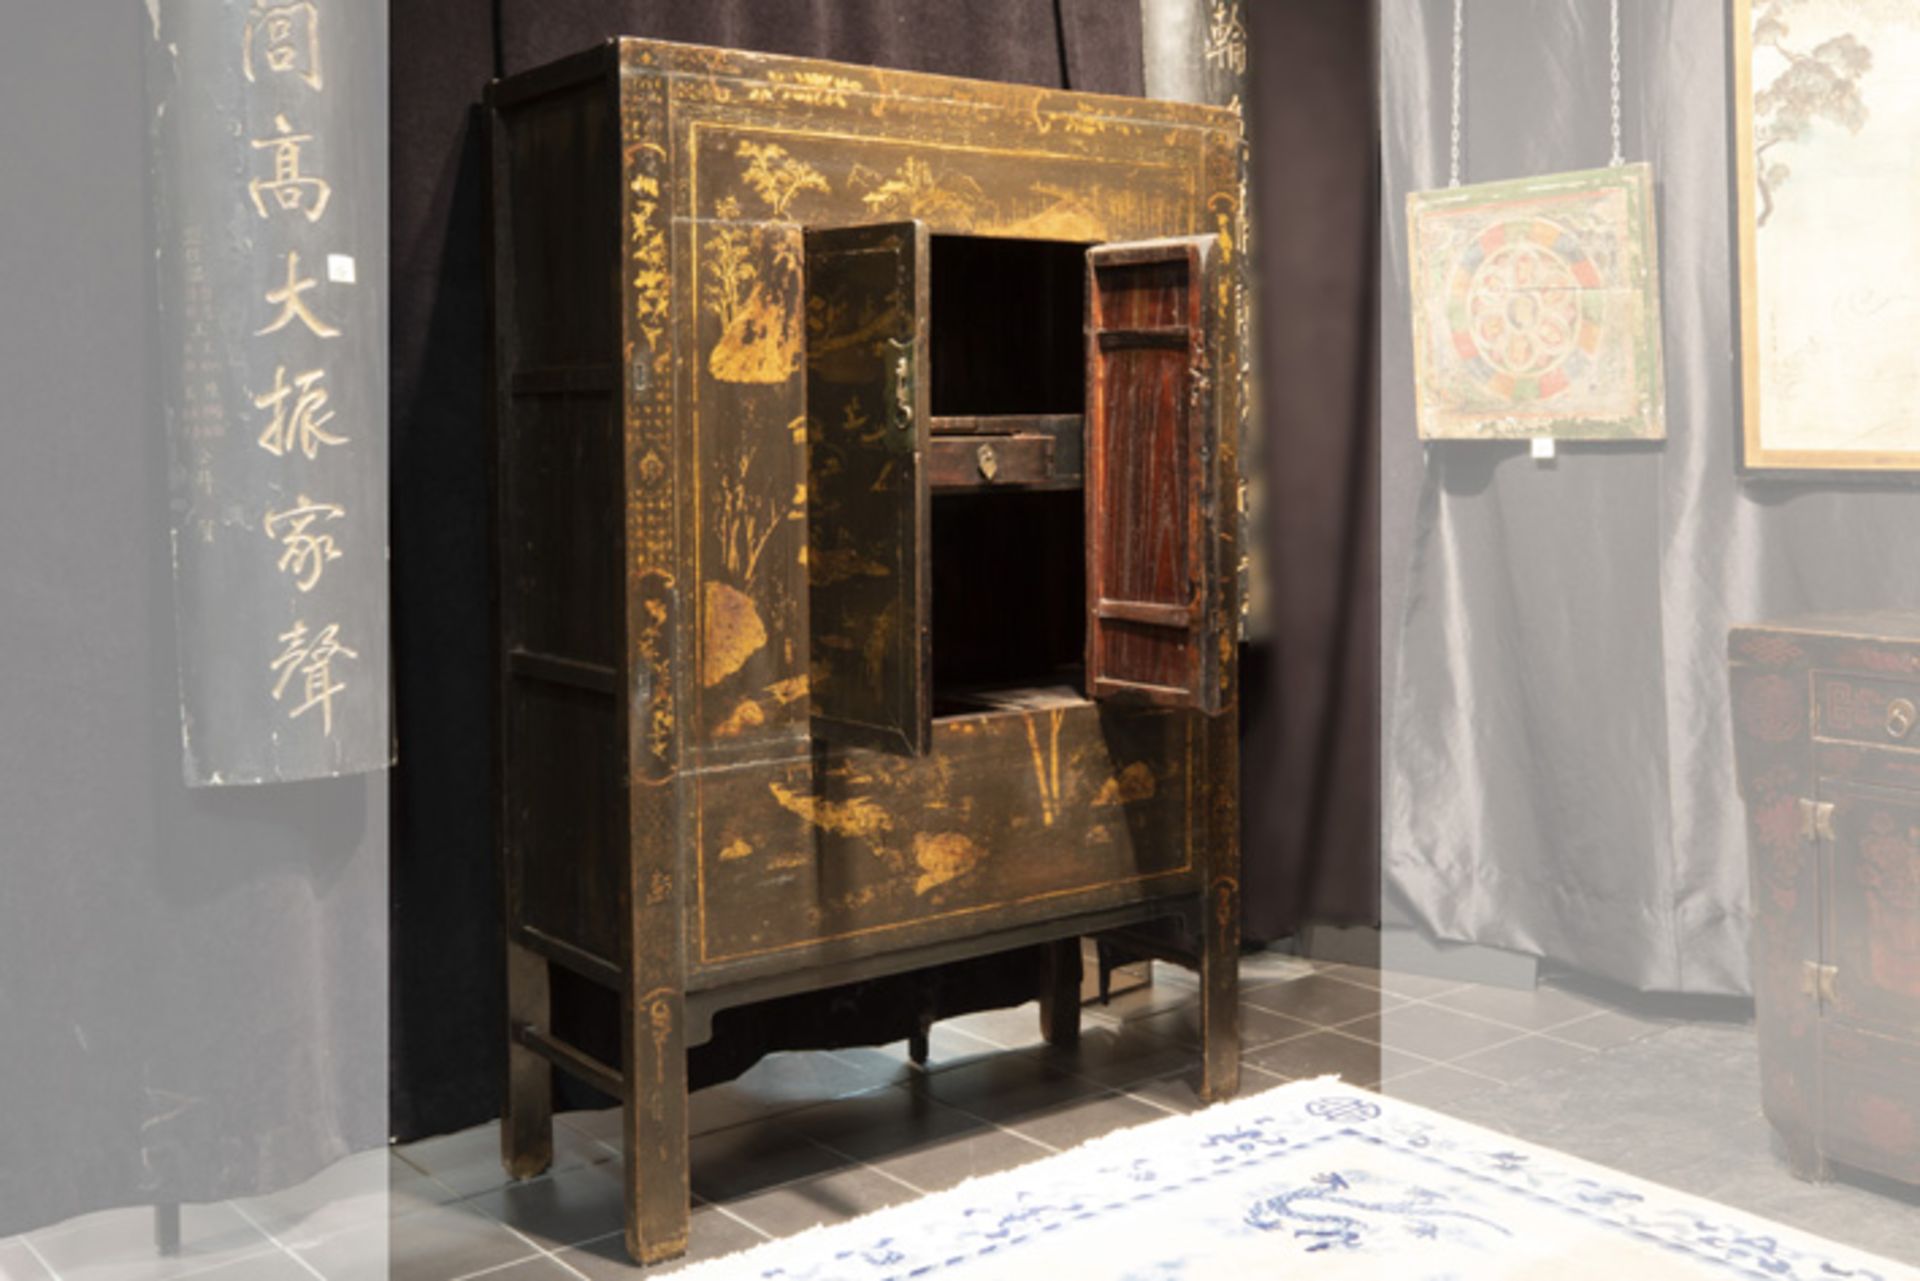 CHINA / SHANXI - QING-DYNASTIE (1644 - 1912) mooi antiek meubel in gelakt hout met [...] - Bild 2 aus 2